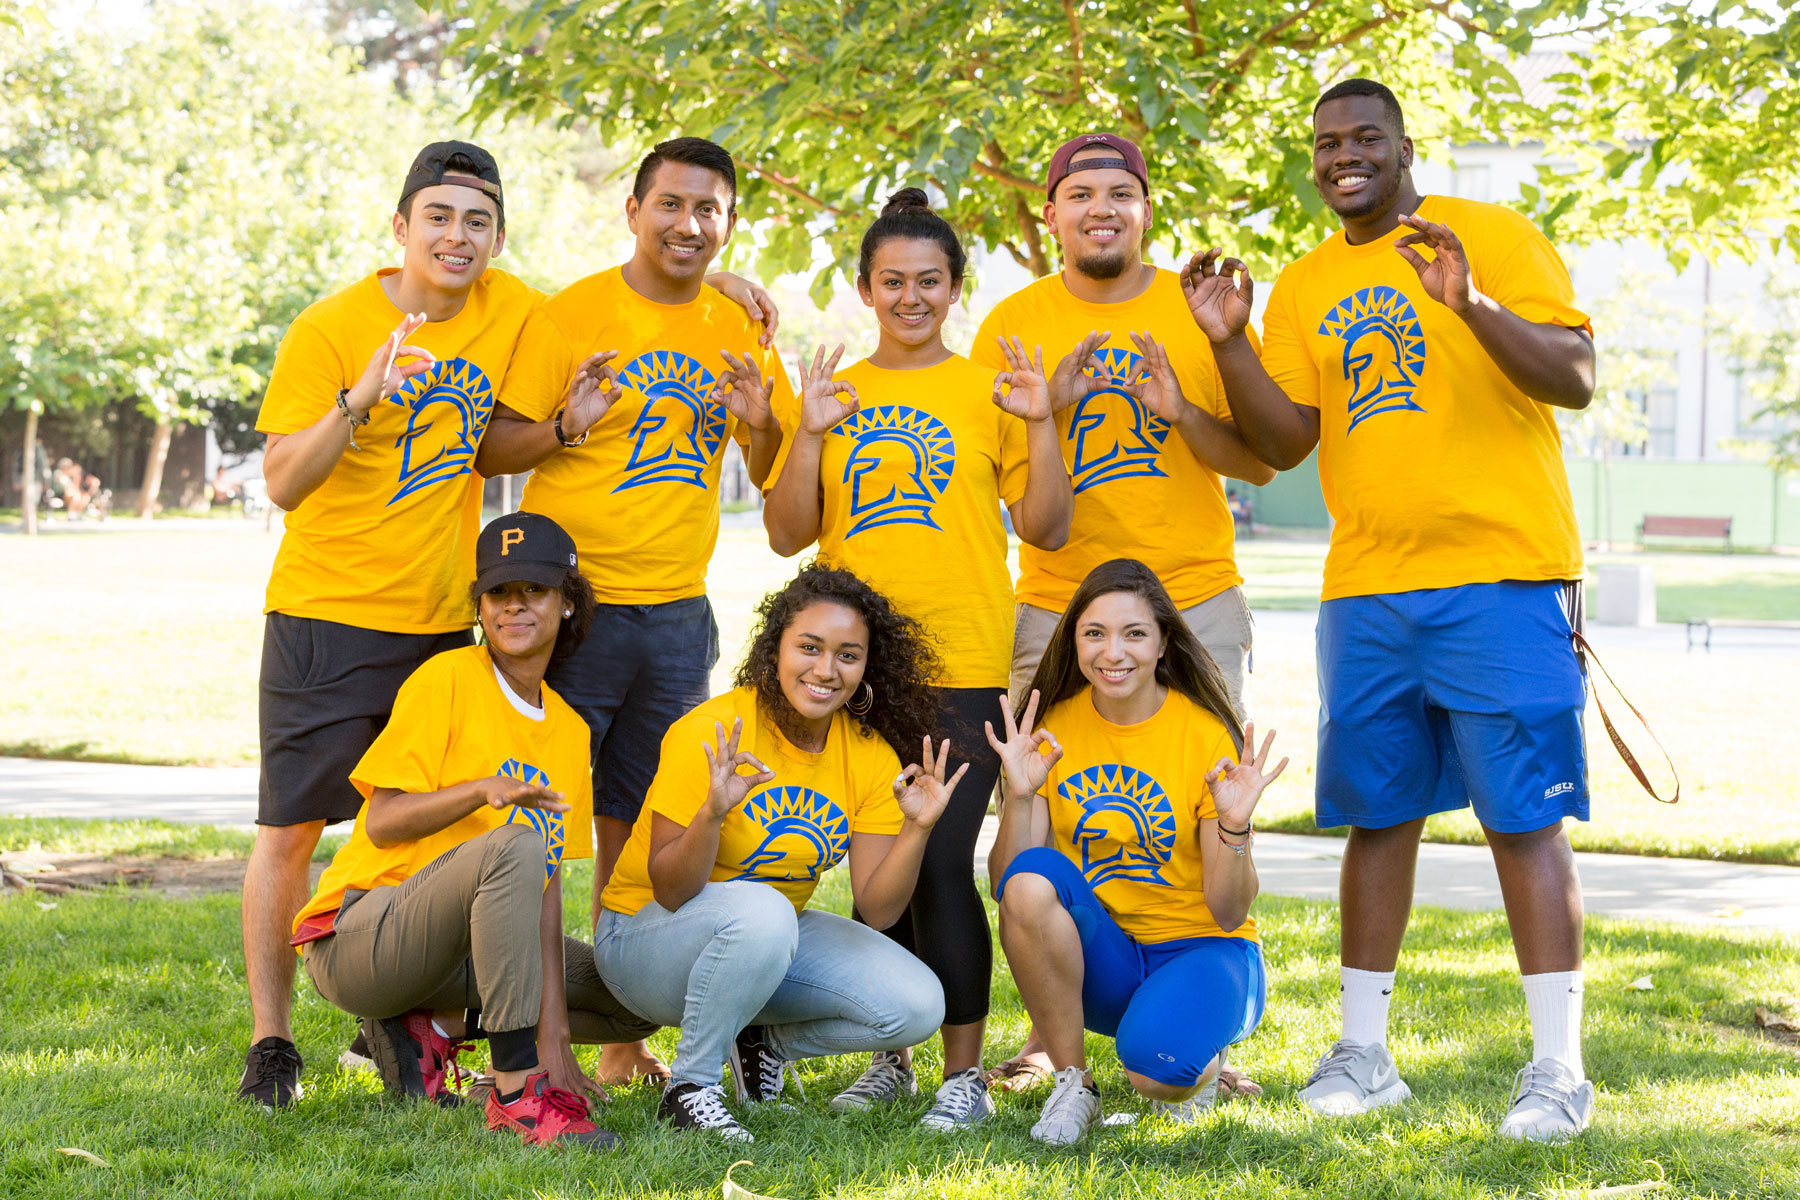 Group of SJSU students wearing yellow SJSU shirt.